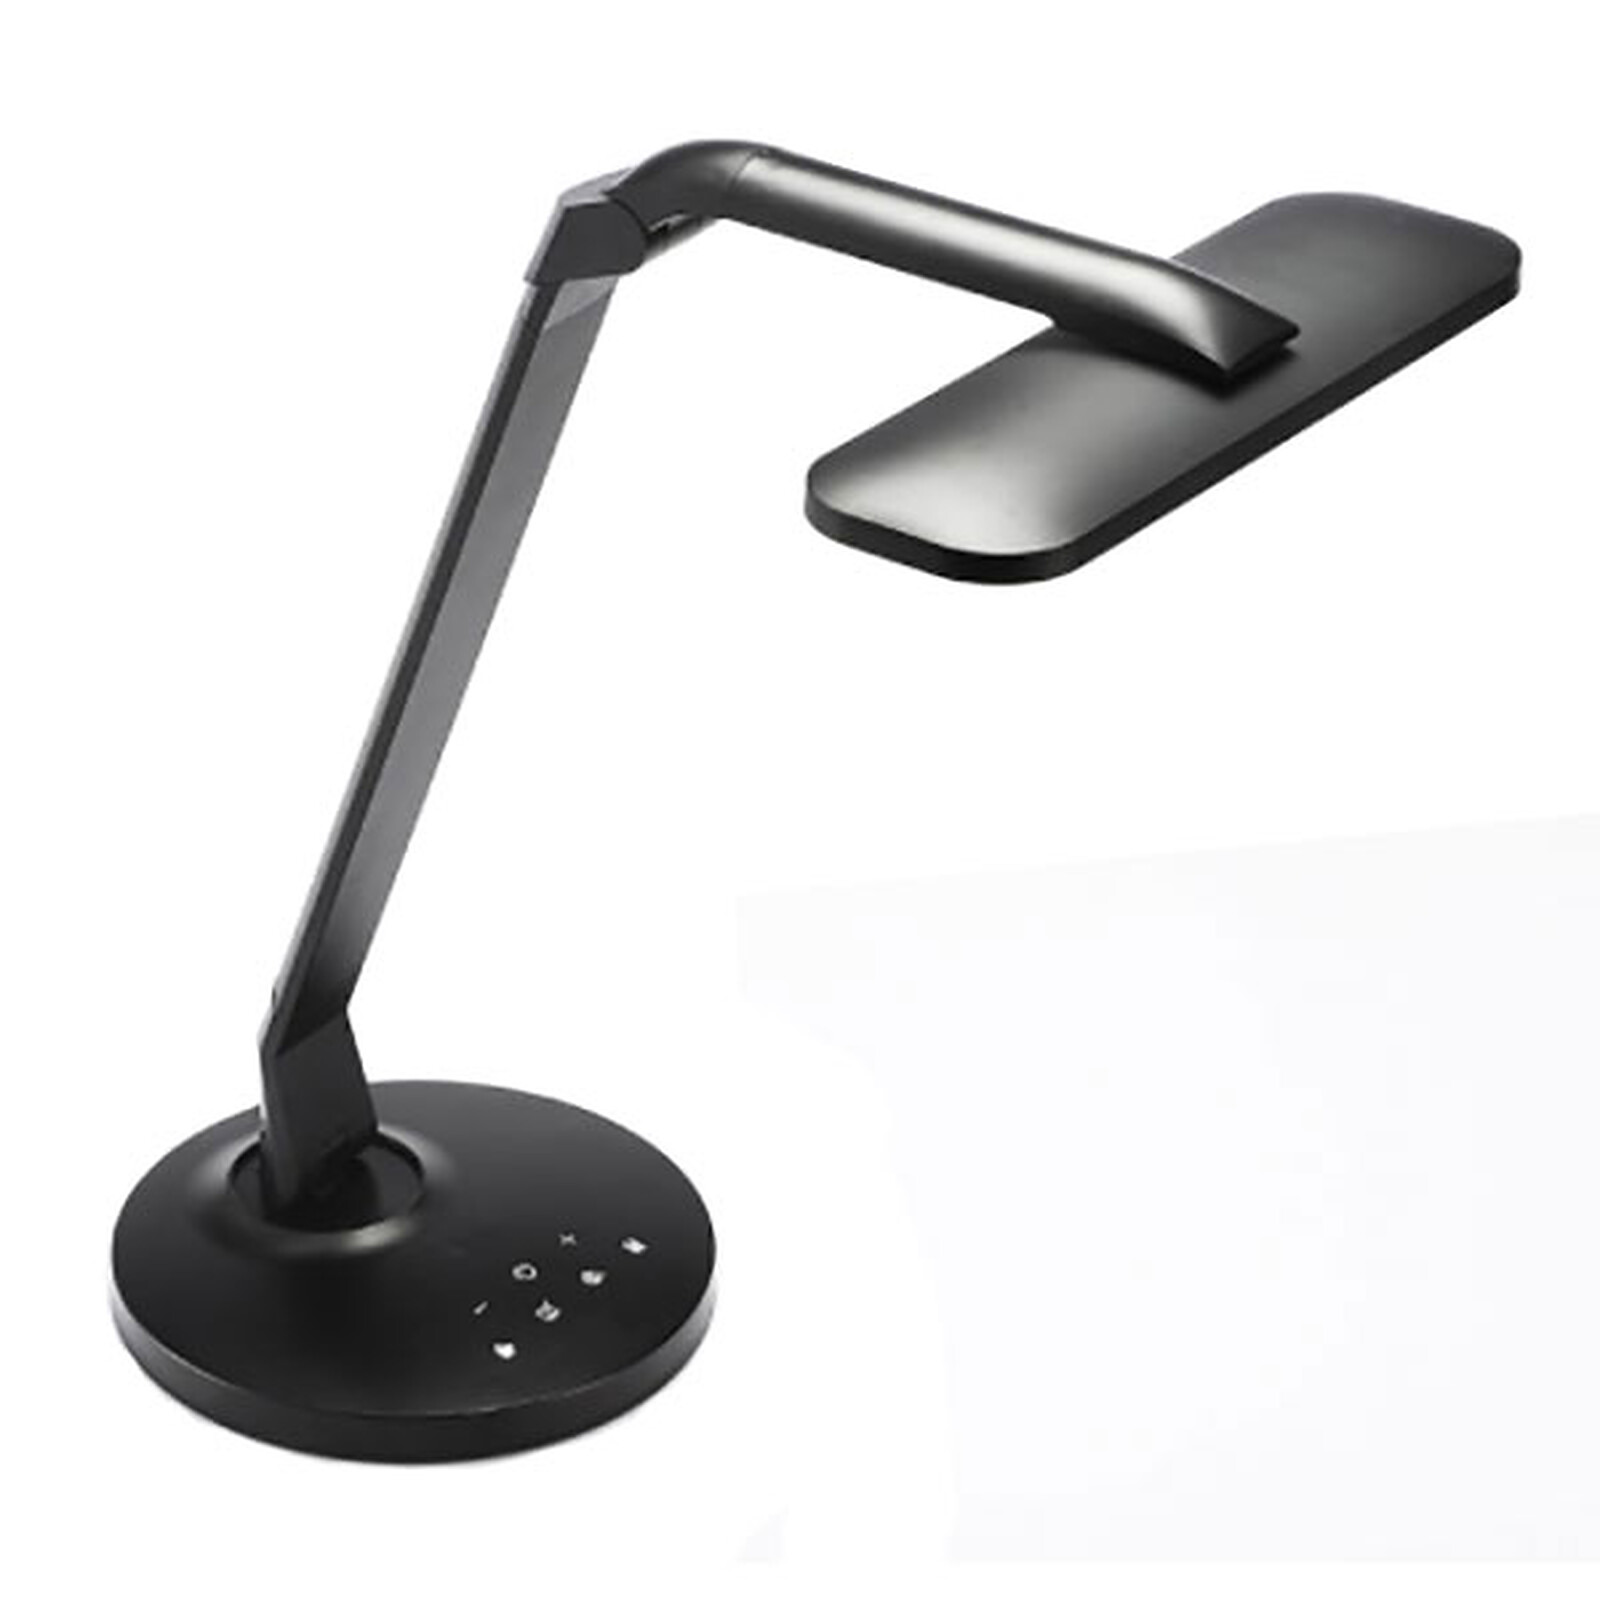 Ineo Design X-7 Noir - Lampe de bureau - Garantie 3 ans LDLC